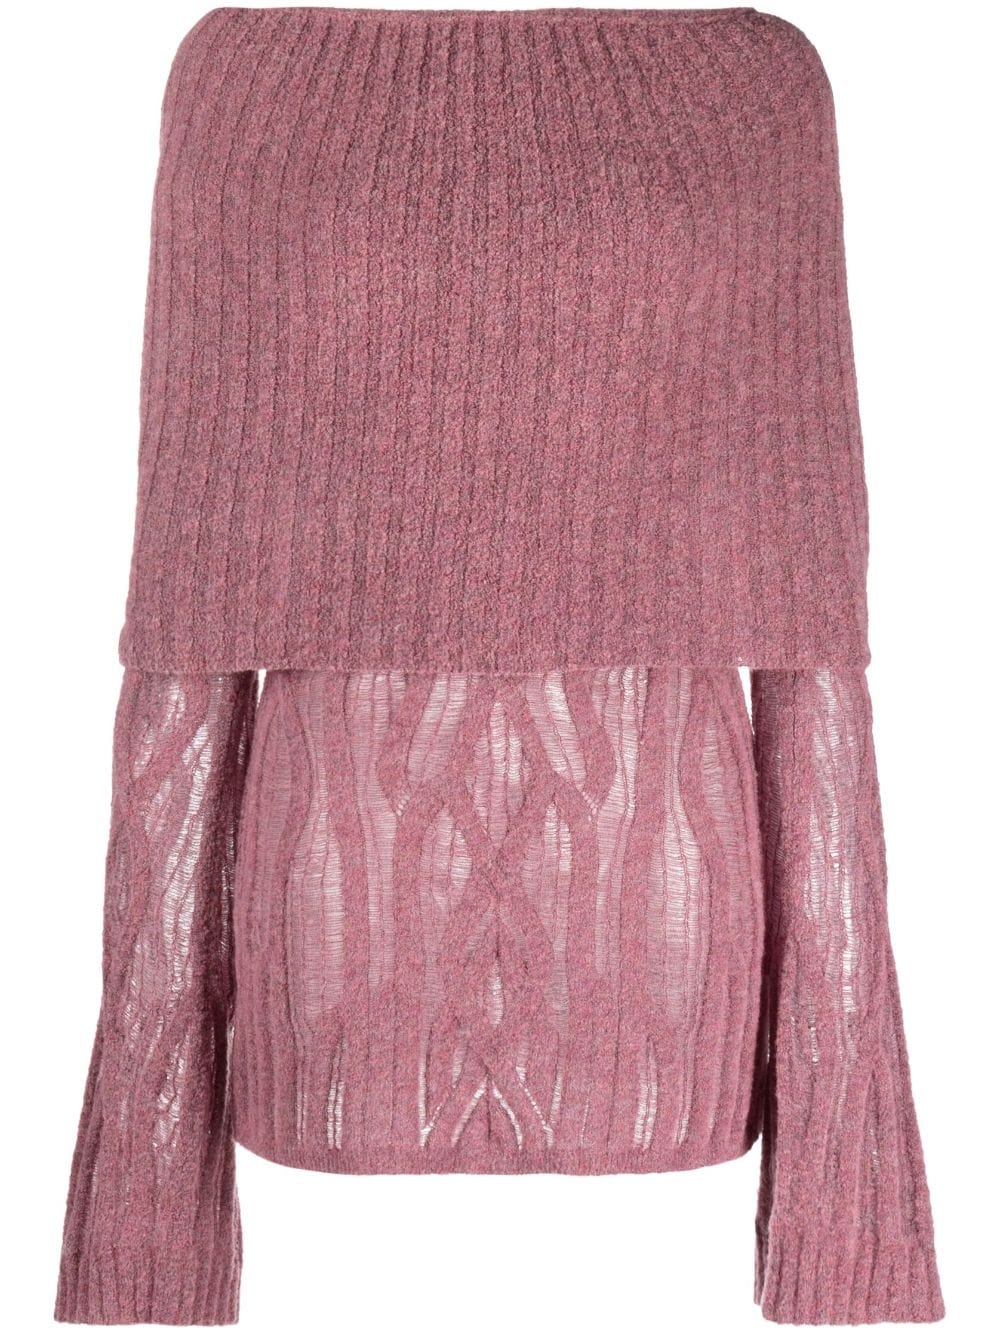 Lilac Sheer Knit Contrast Panels Pants